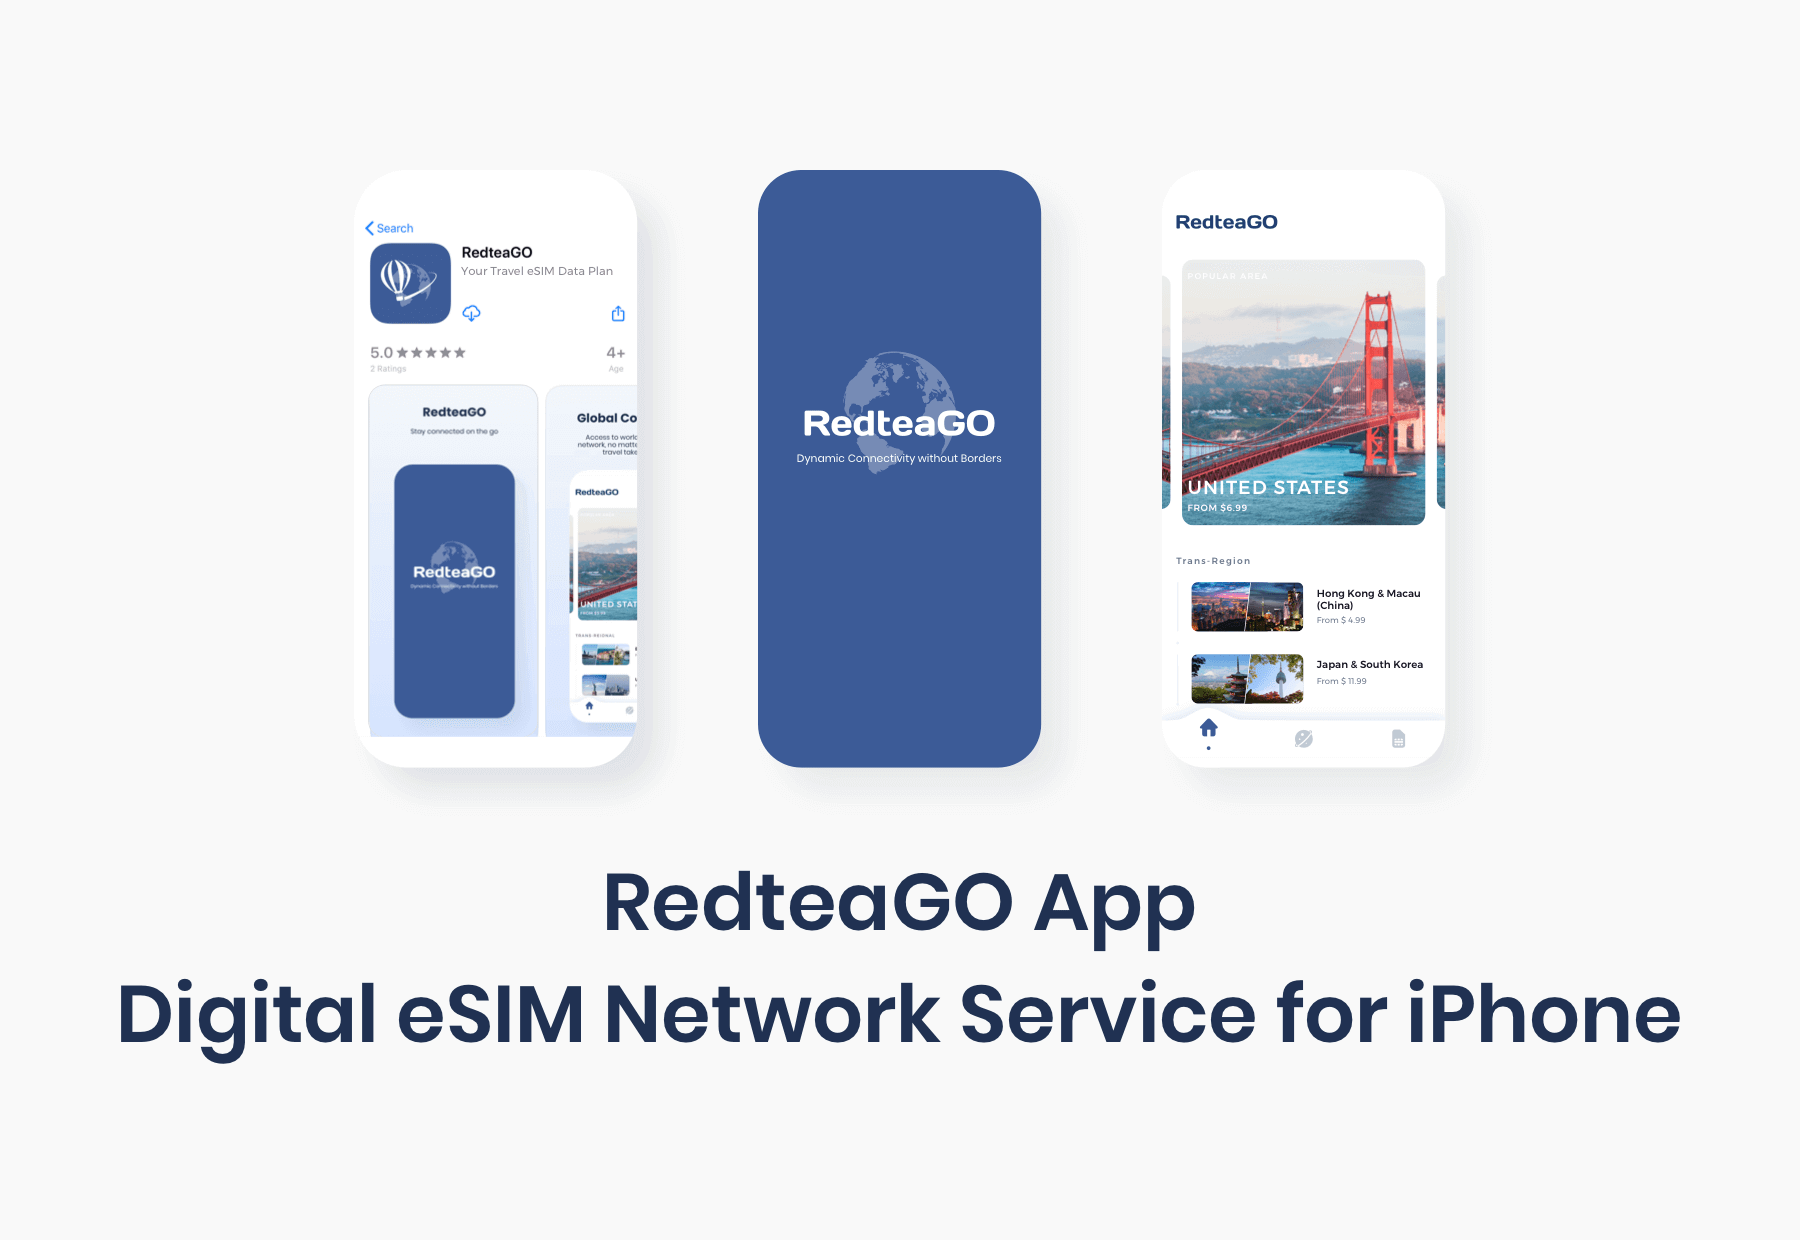 Redtea Mobile Launches eSIM-Based Data Service RedteaGO on iPhone